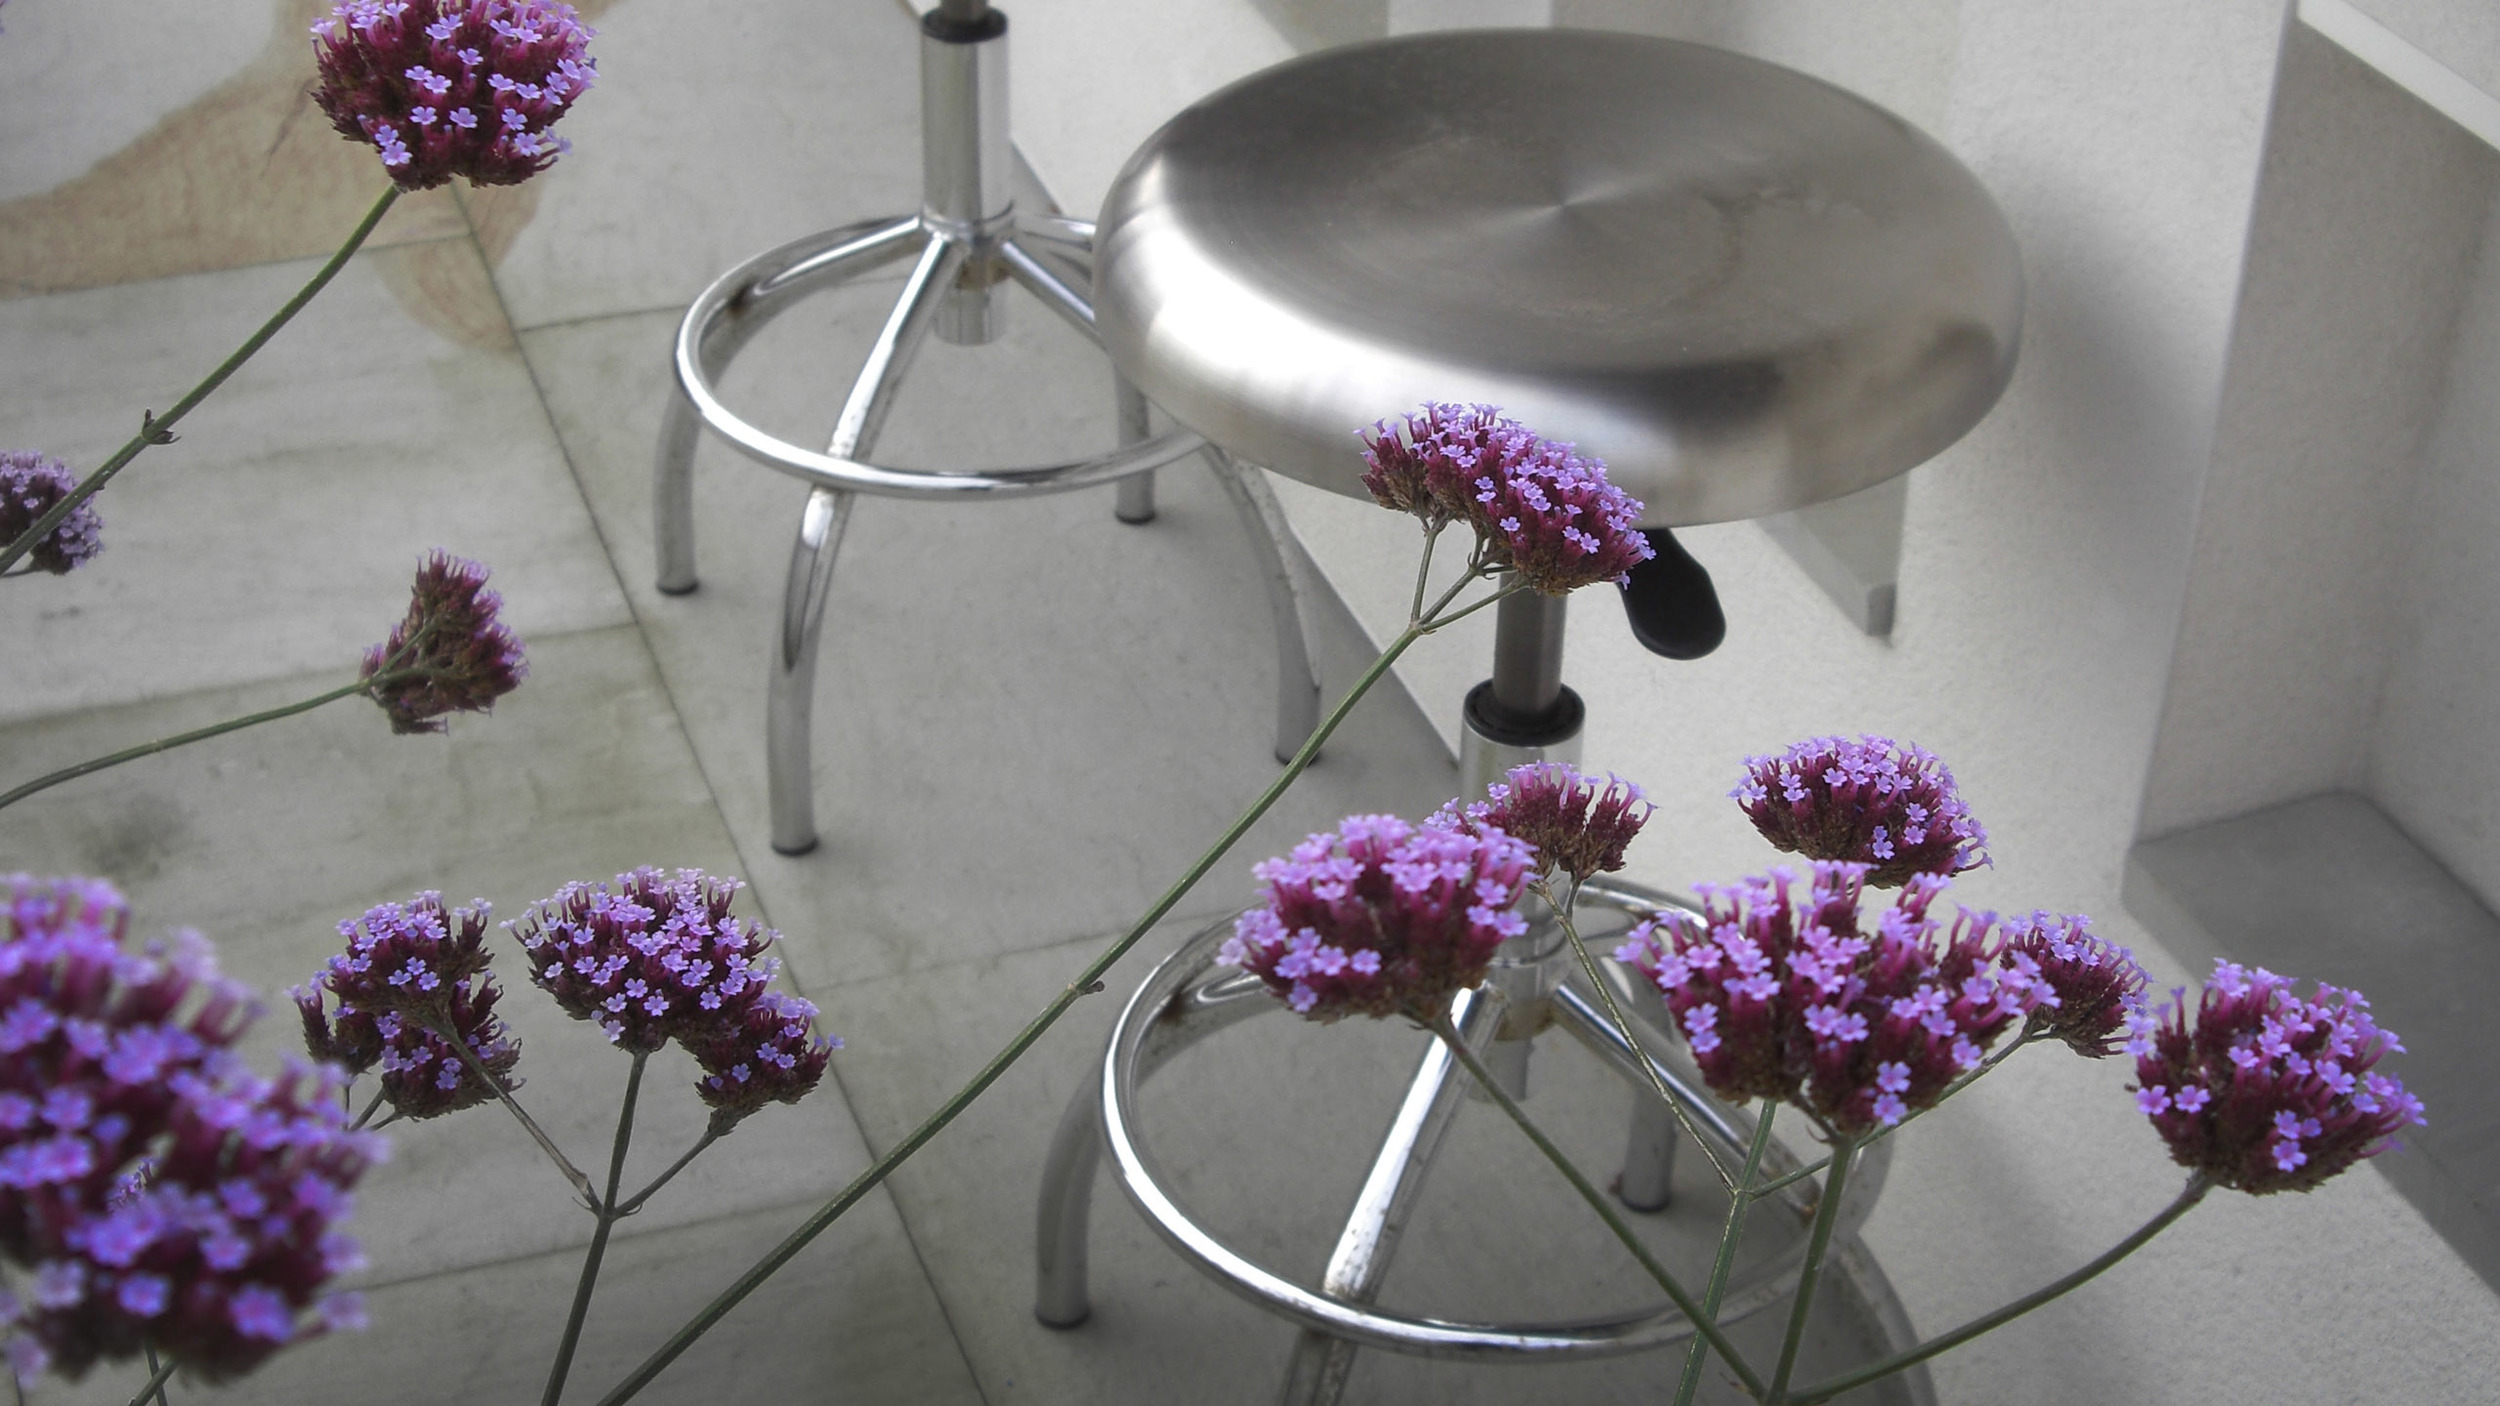 Outdoor bar stools with bar and Verbena bonariensis